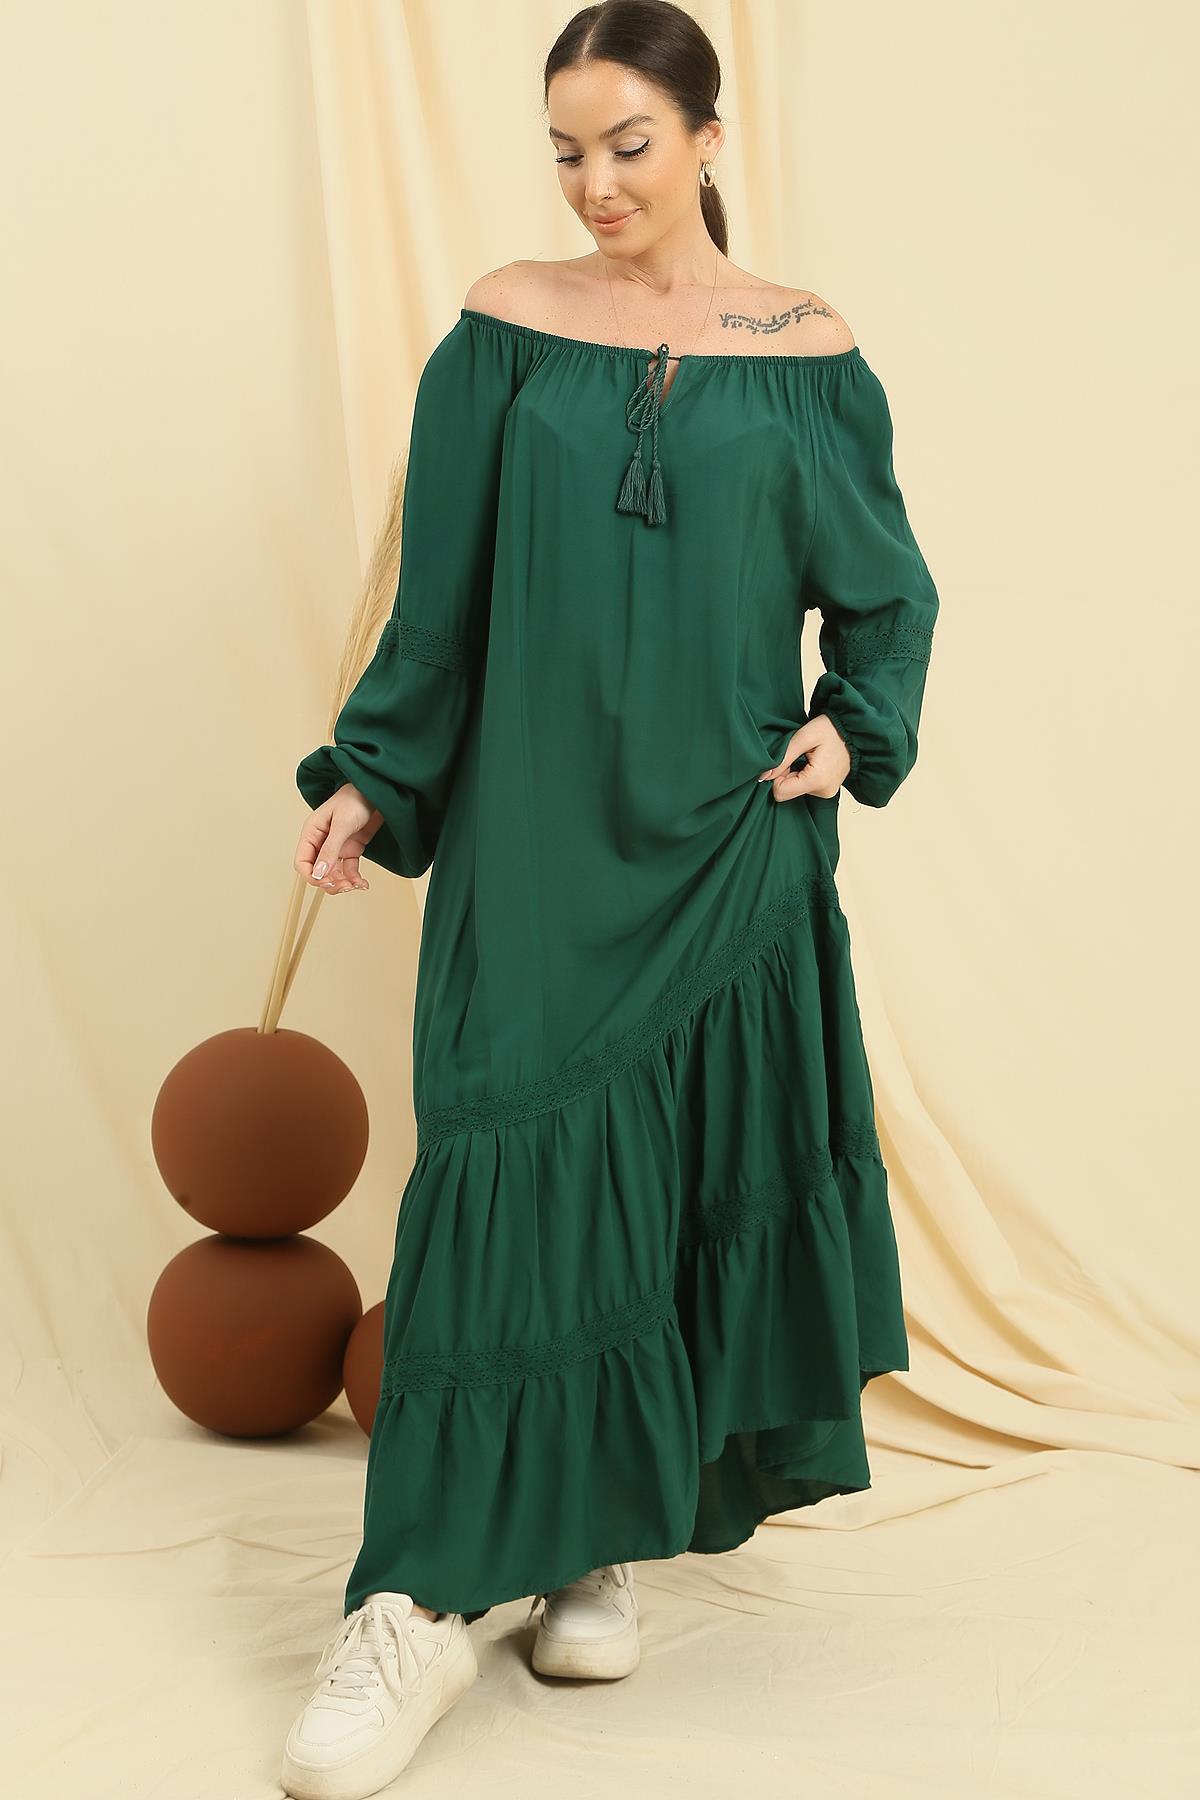 Levně By Saygı Lace Detailed Long Sleeve Oversize Viscose Dress with Collar Laced